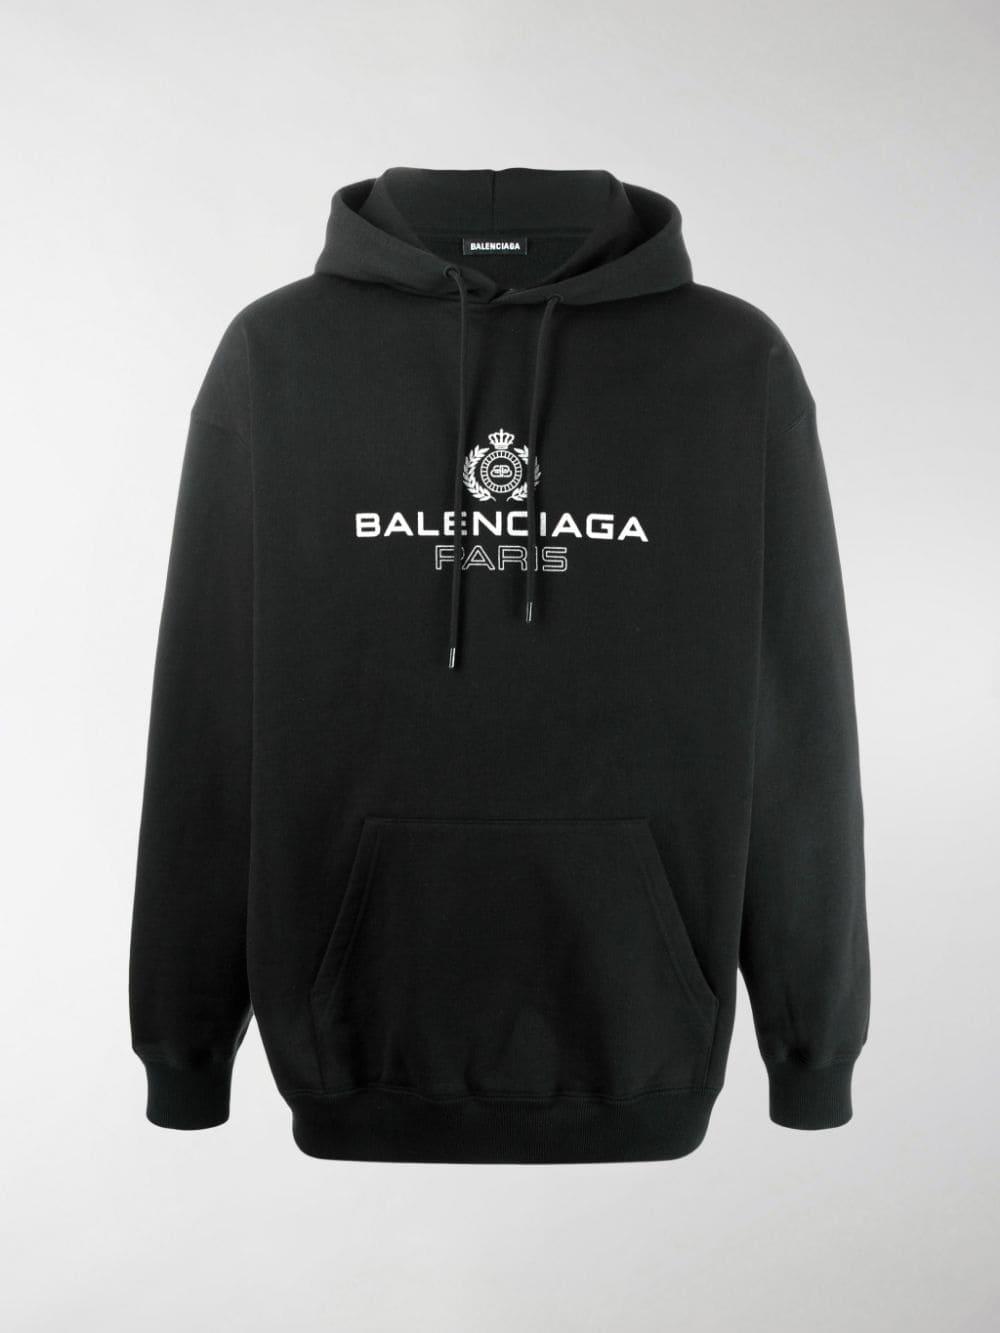 Balenciaga Logo Emblem Print Hoodie in Black for Men - Lyst